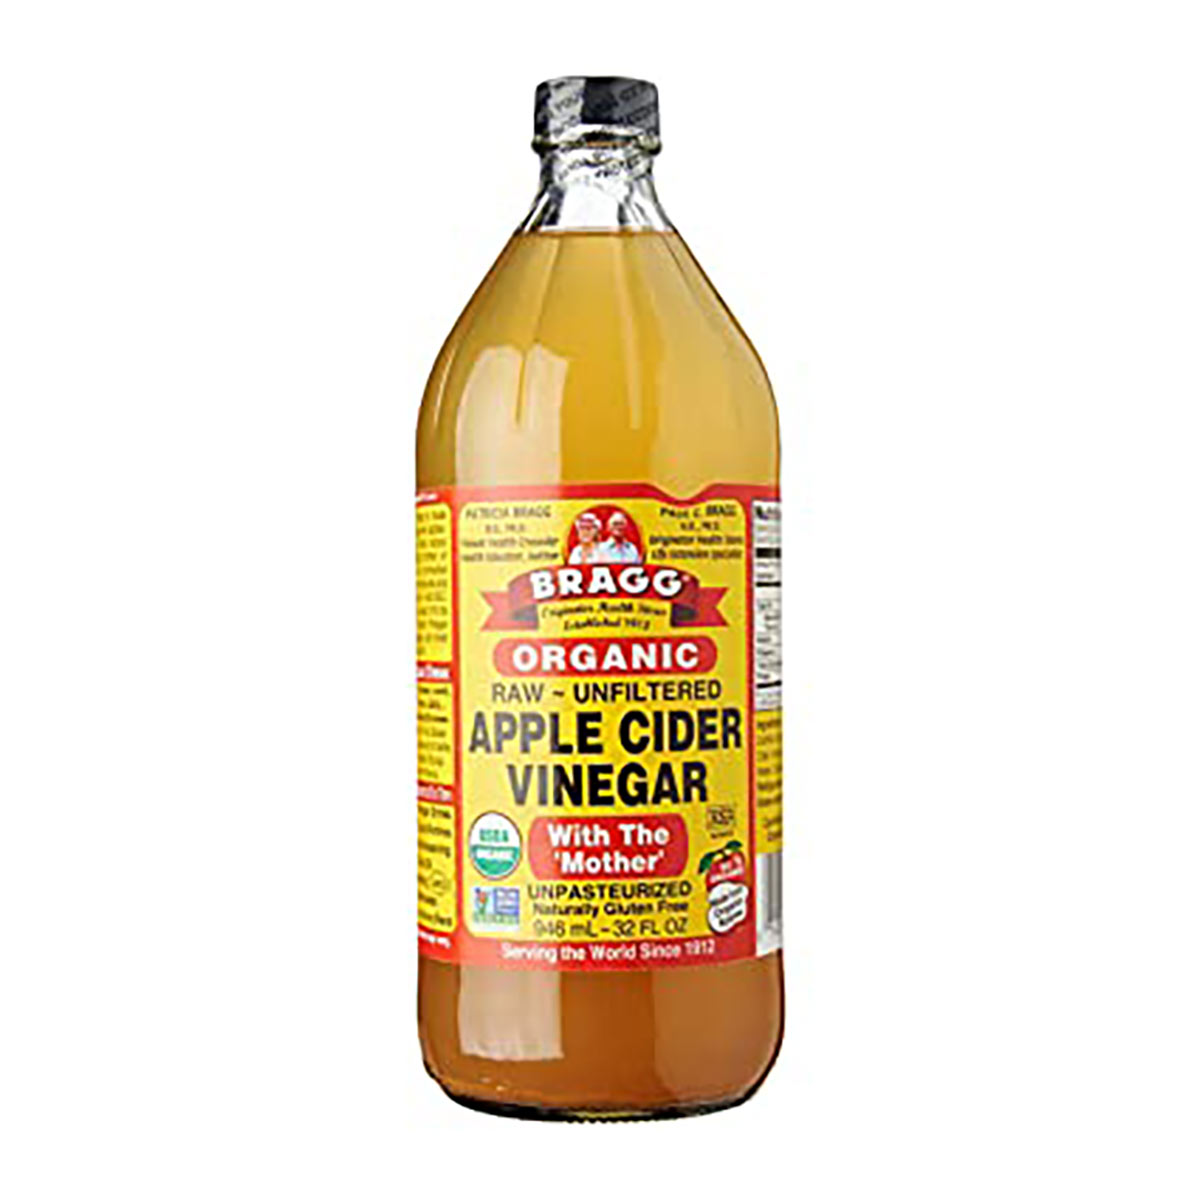 bragg apple cider vinegar